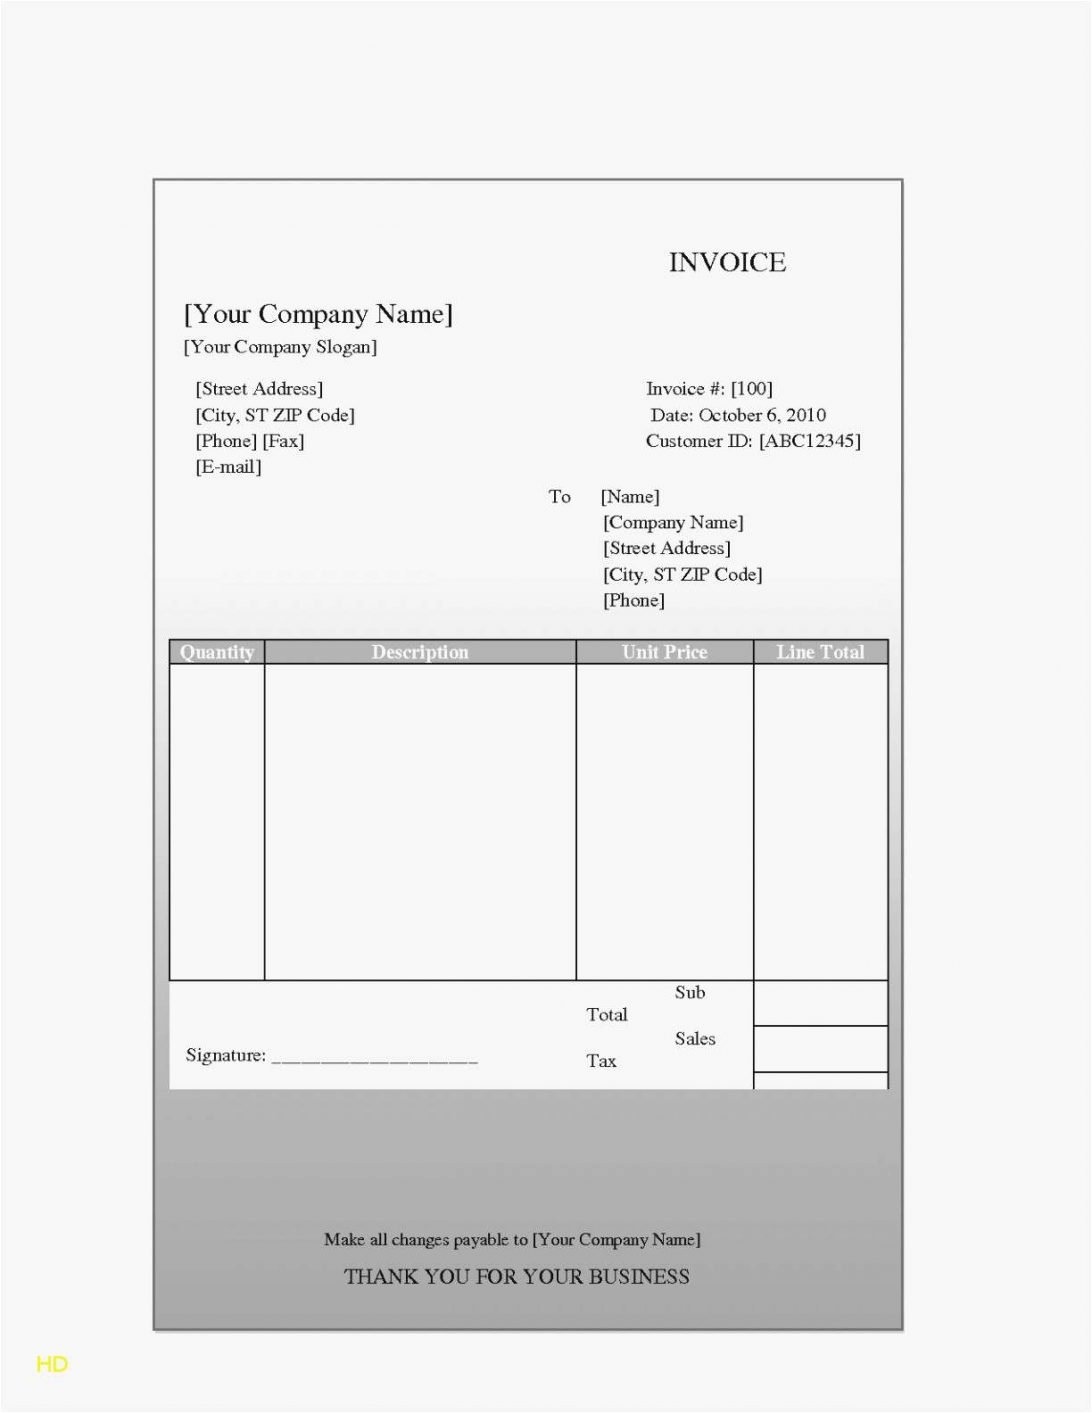 Google Doc Receipt Template Unique Invoice Design Invoice Template for Google Docs Make